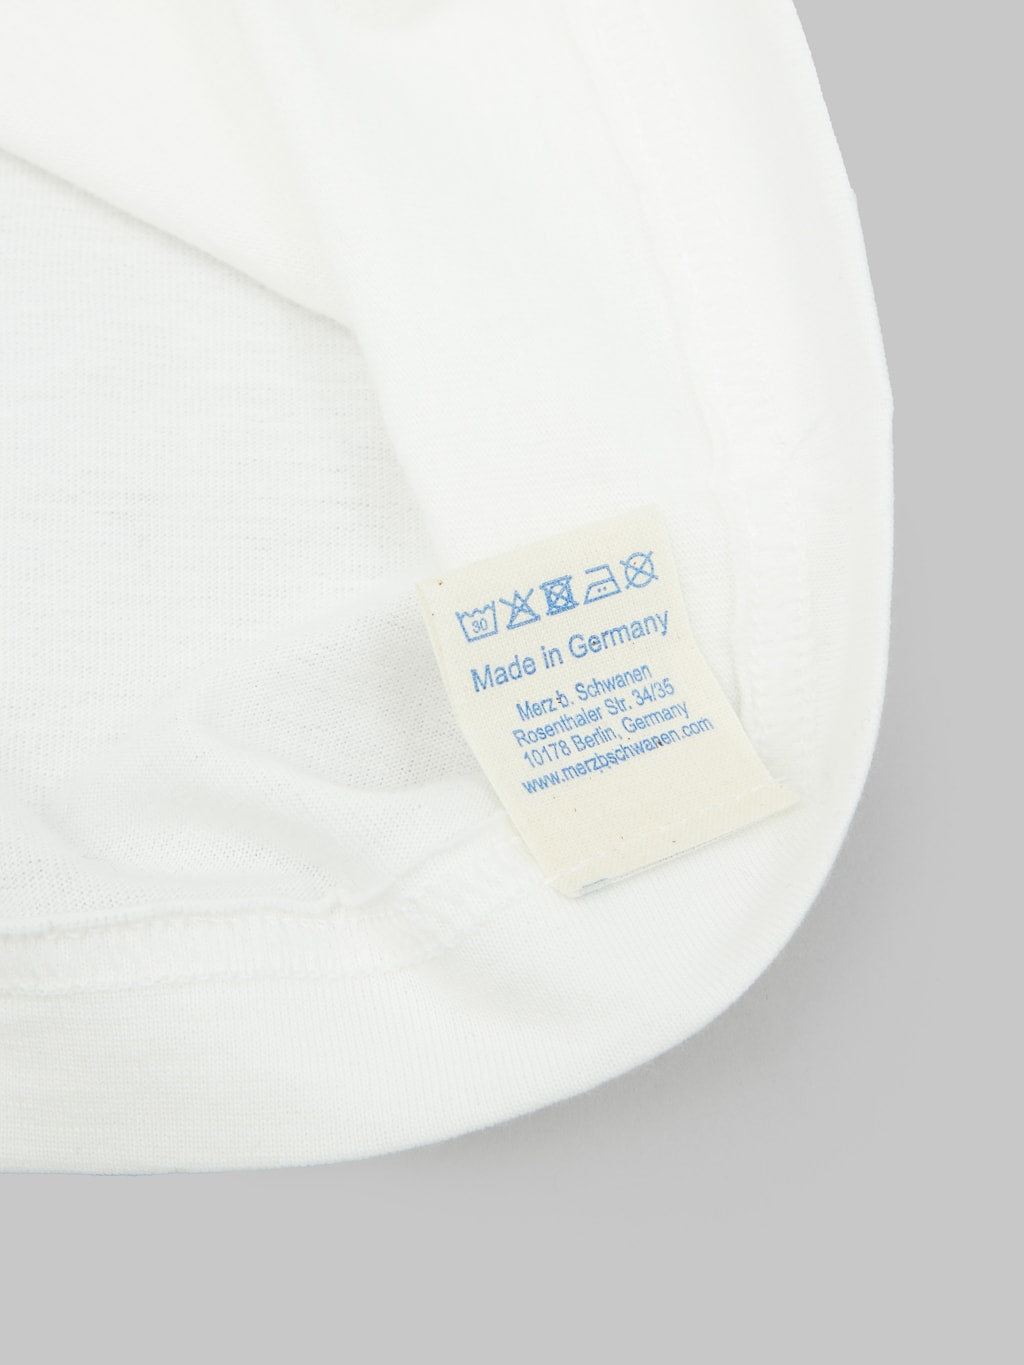 Merz Schwanen 1950s Loopwheeled Classic Fit TShirt white  care label